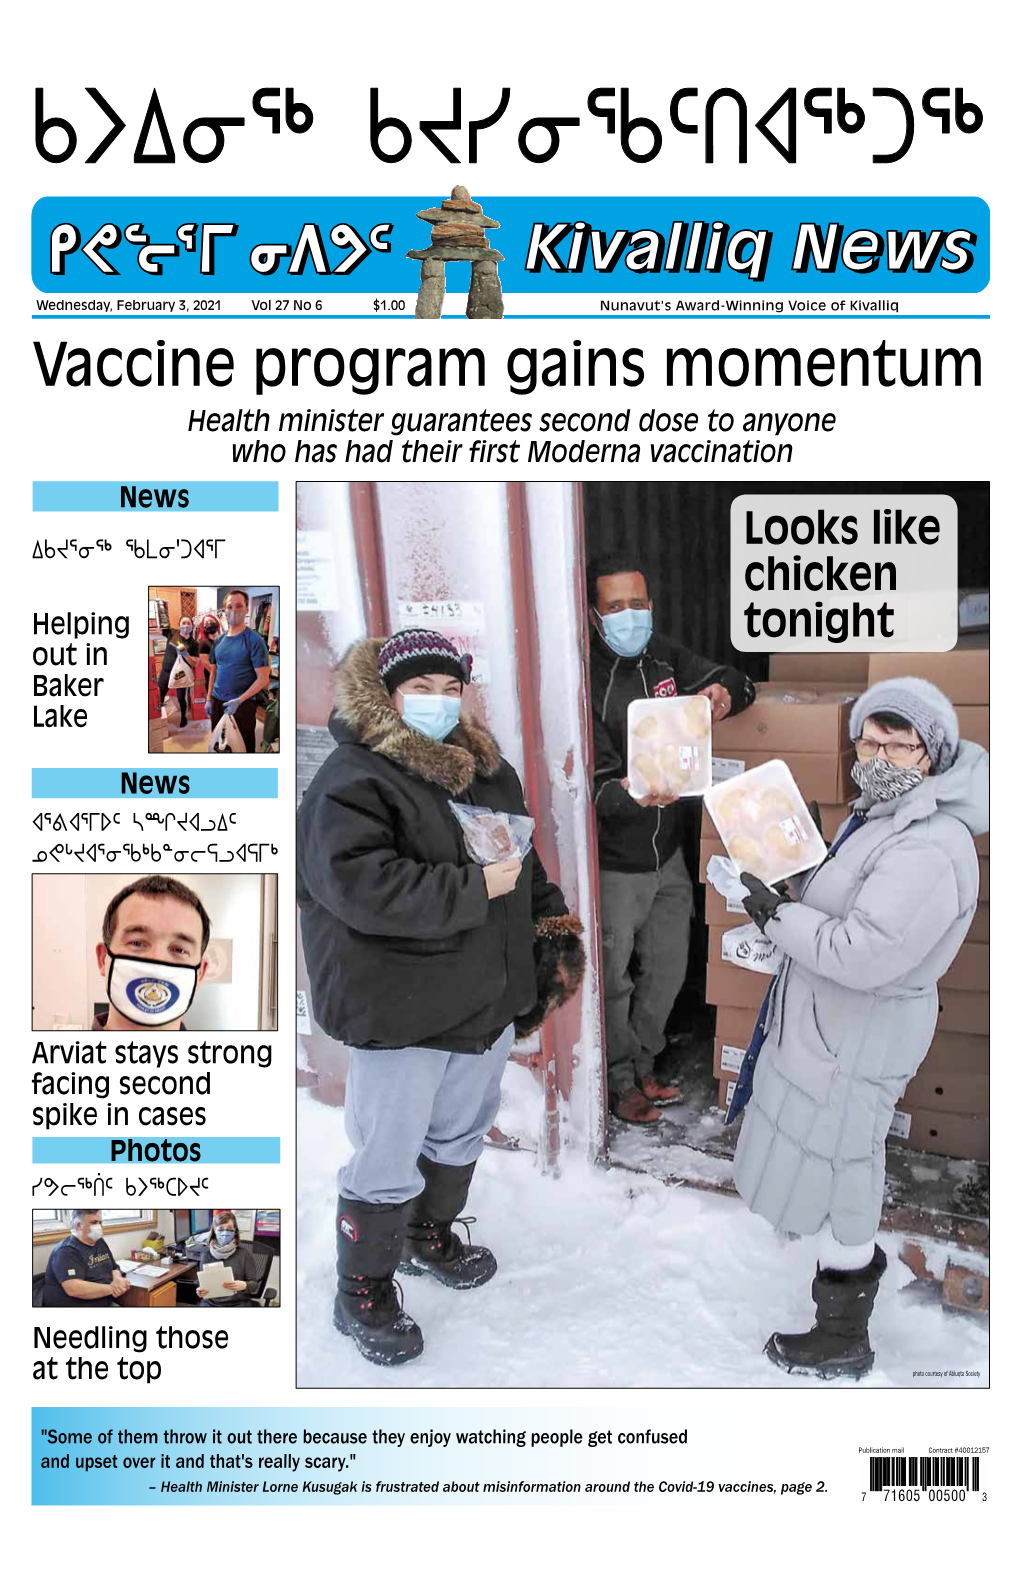 Vaccine Program Gains Momentum